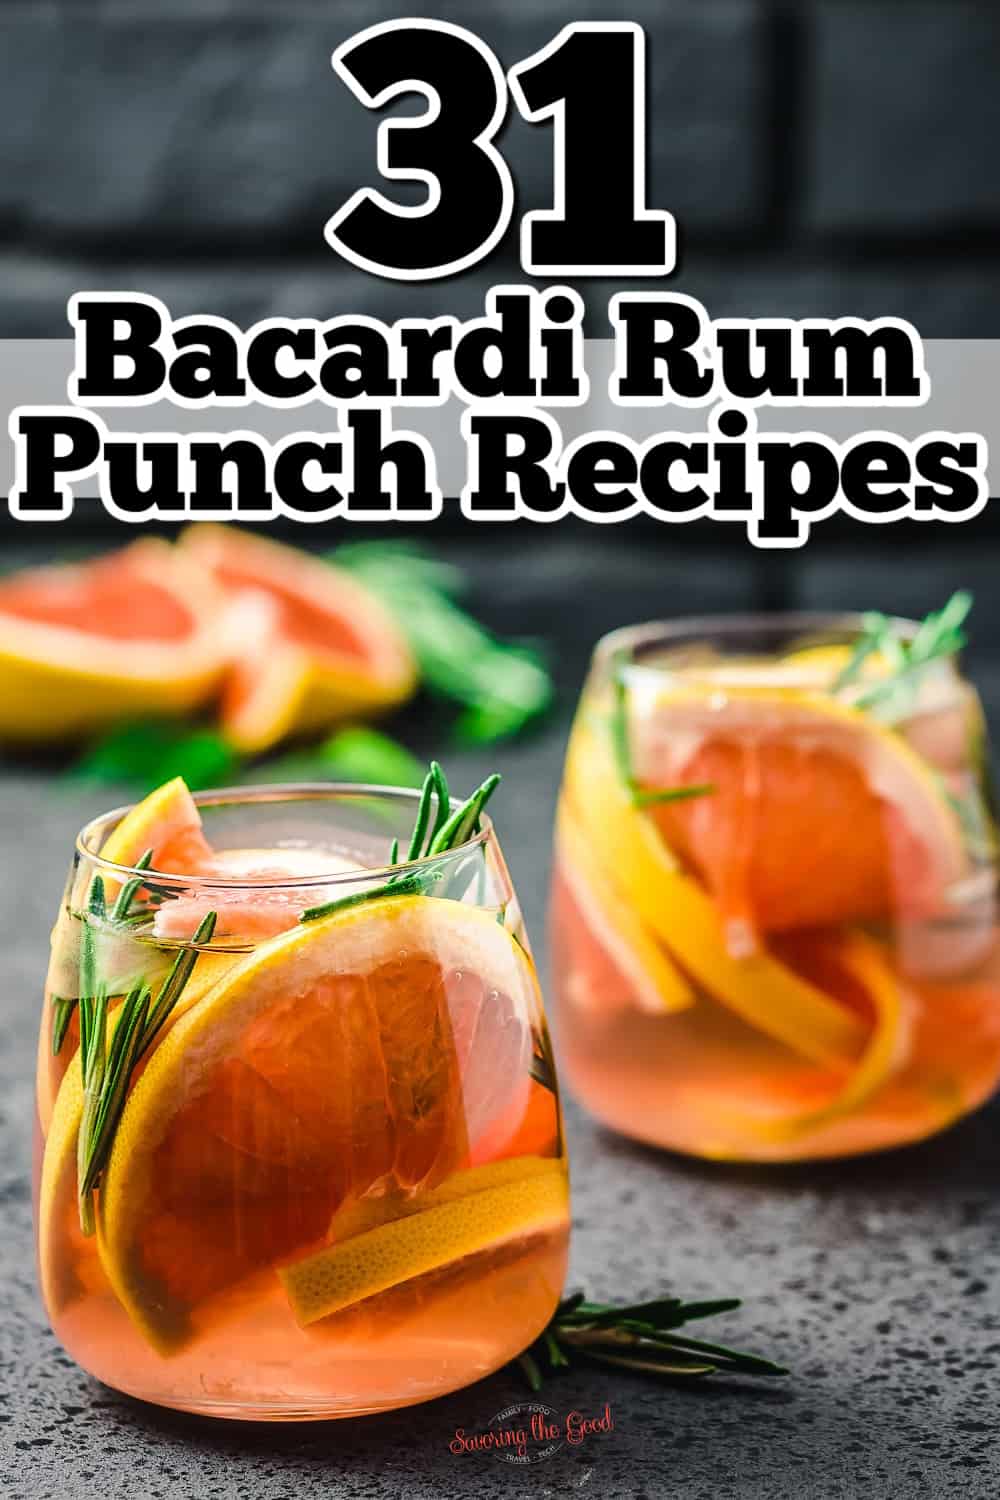 bacardi rum punch recipes. pinterest.